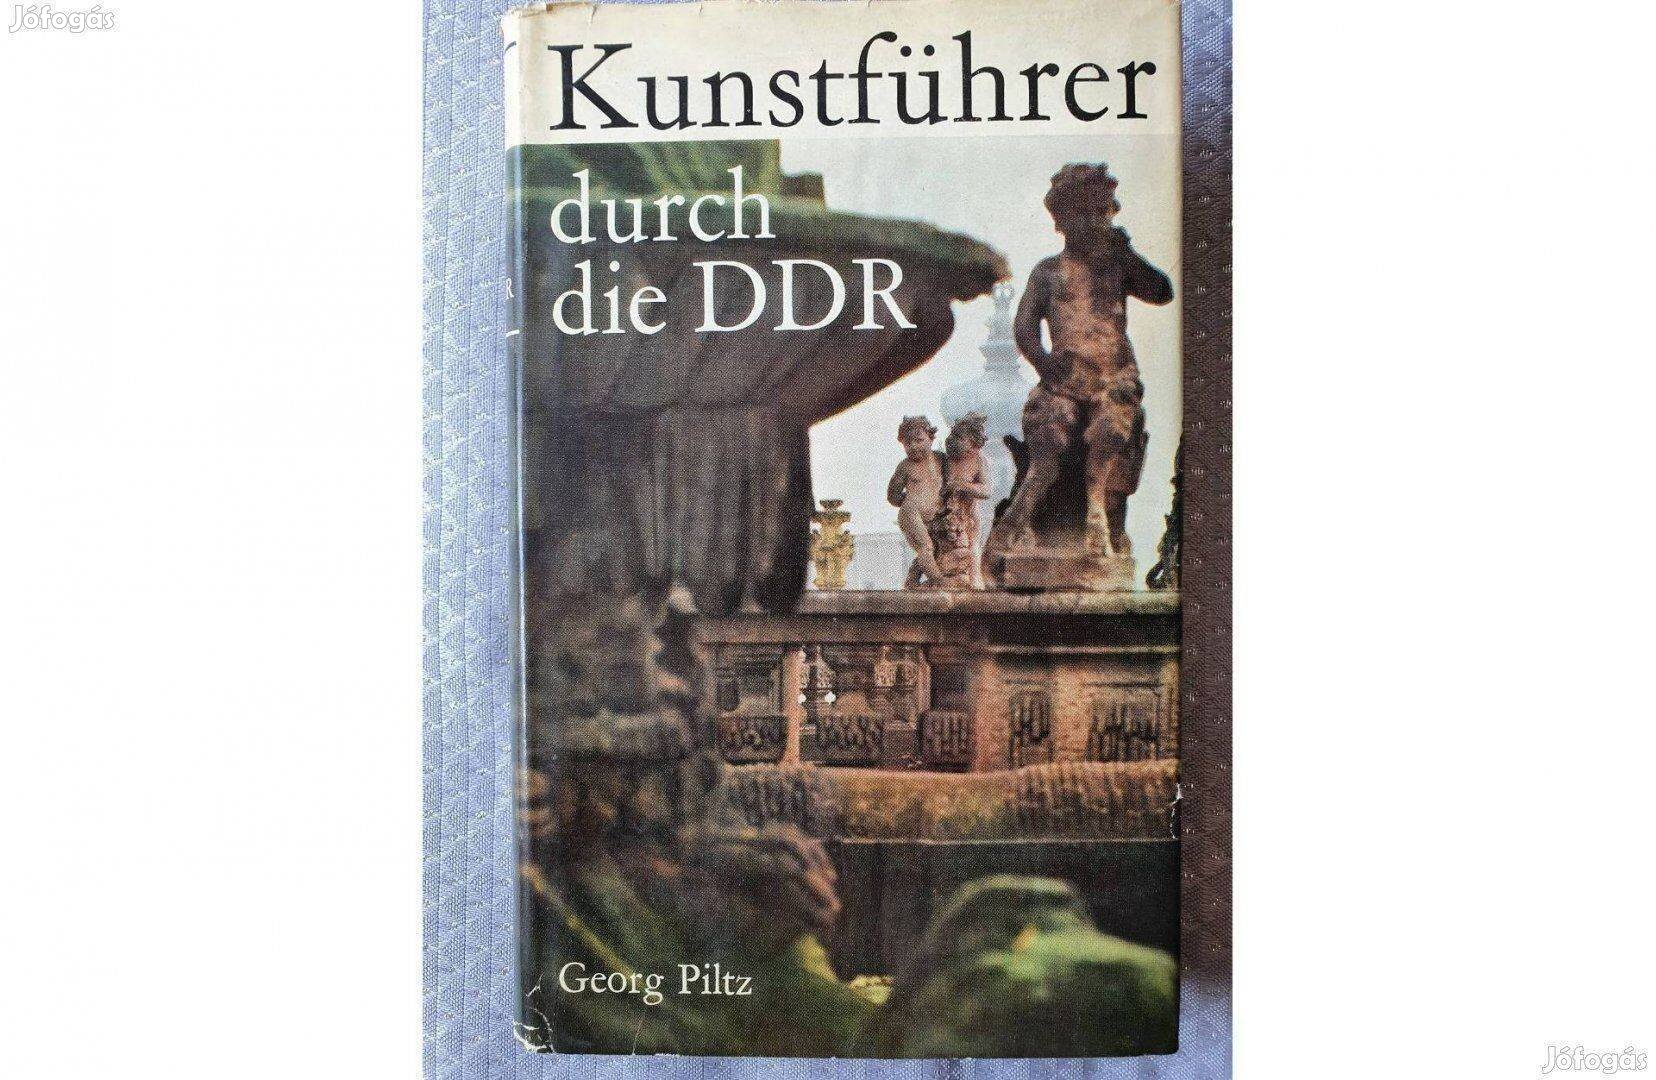 Kunstführer durch die DDR német nyelvű könyv 1976